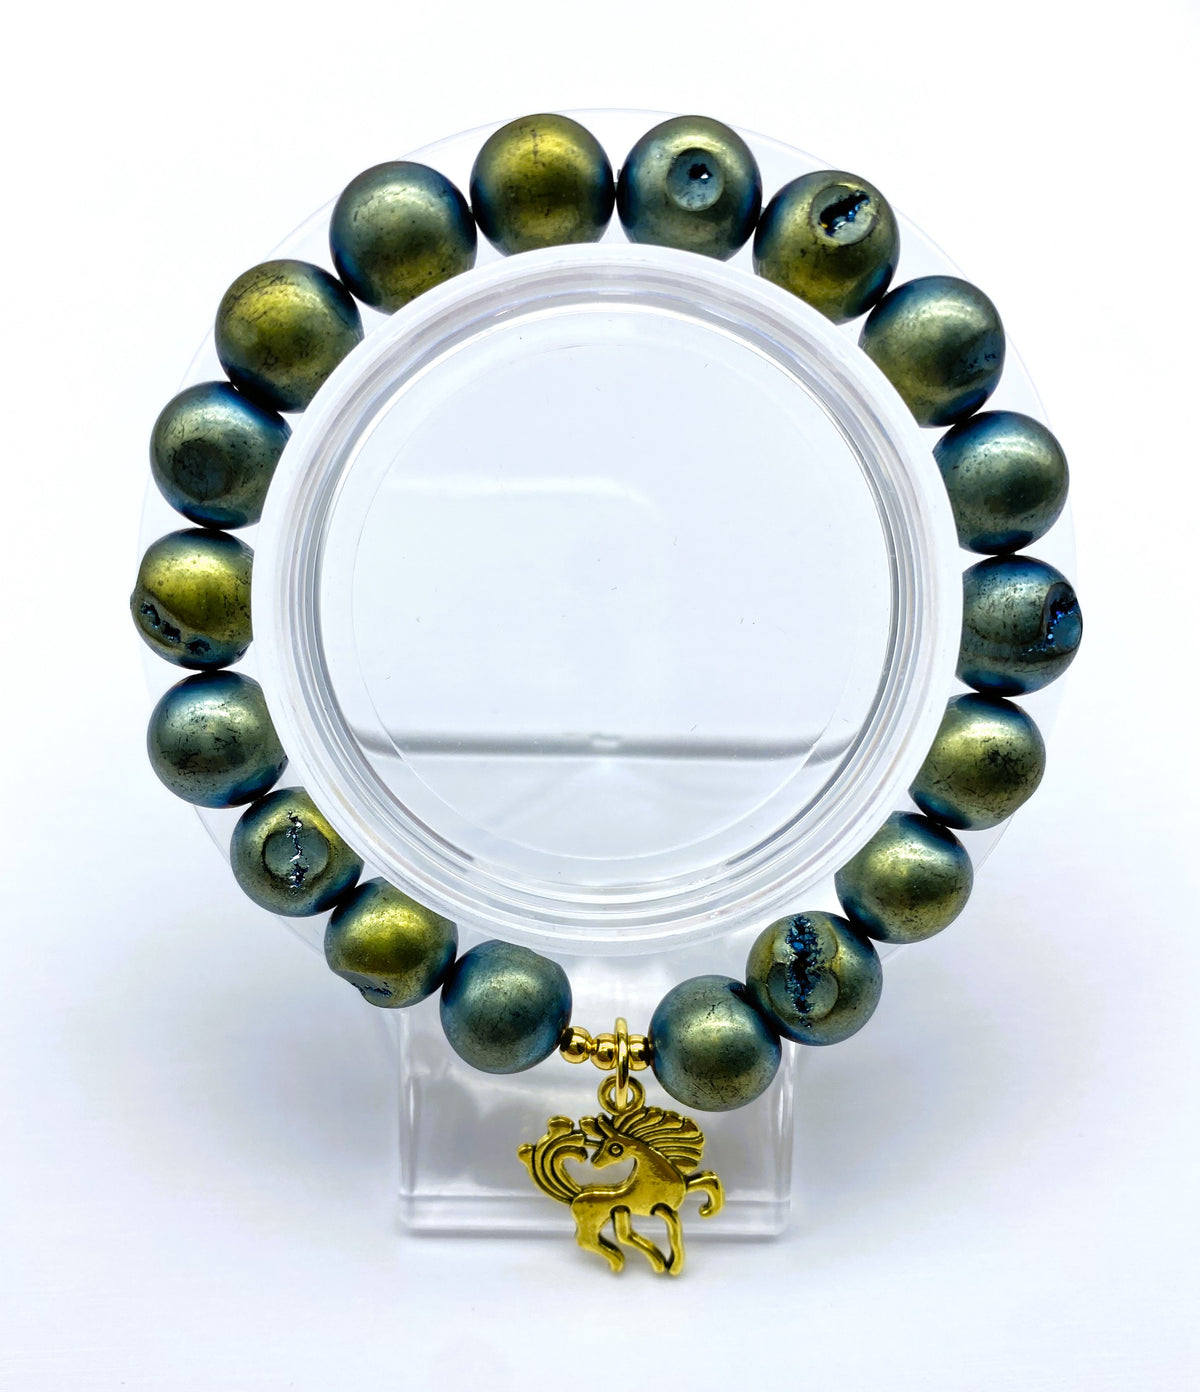 Unique Design 8mm 10mm Druzy Agate Bracelet Collection Gemstone Round Beads Stretch Bracelet 7.5 Inch Unisex